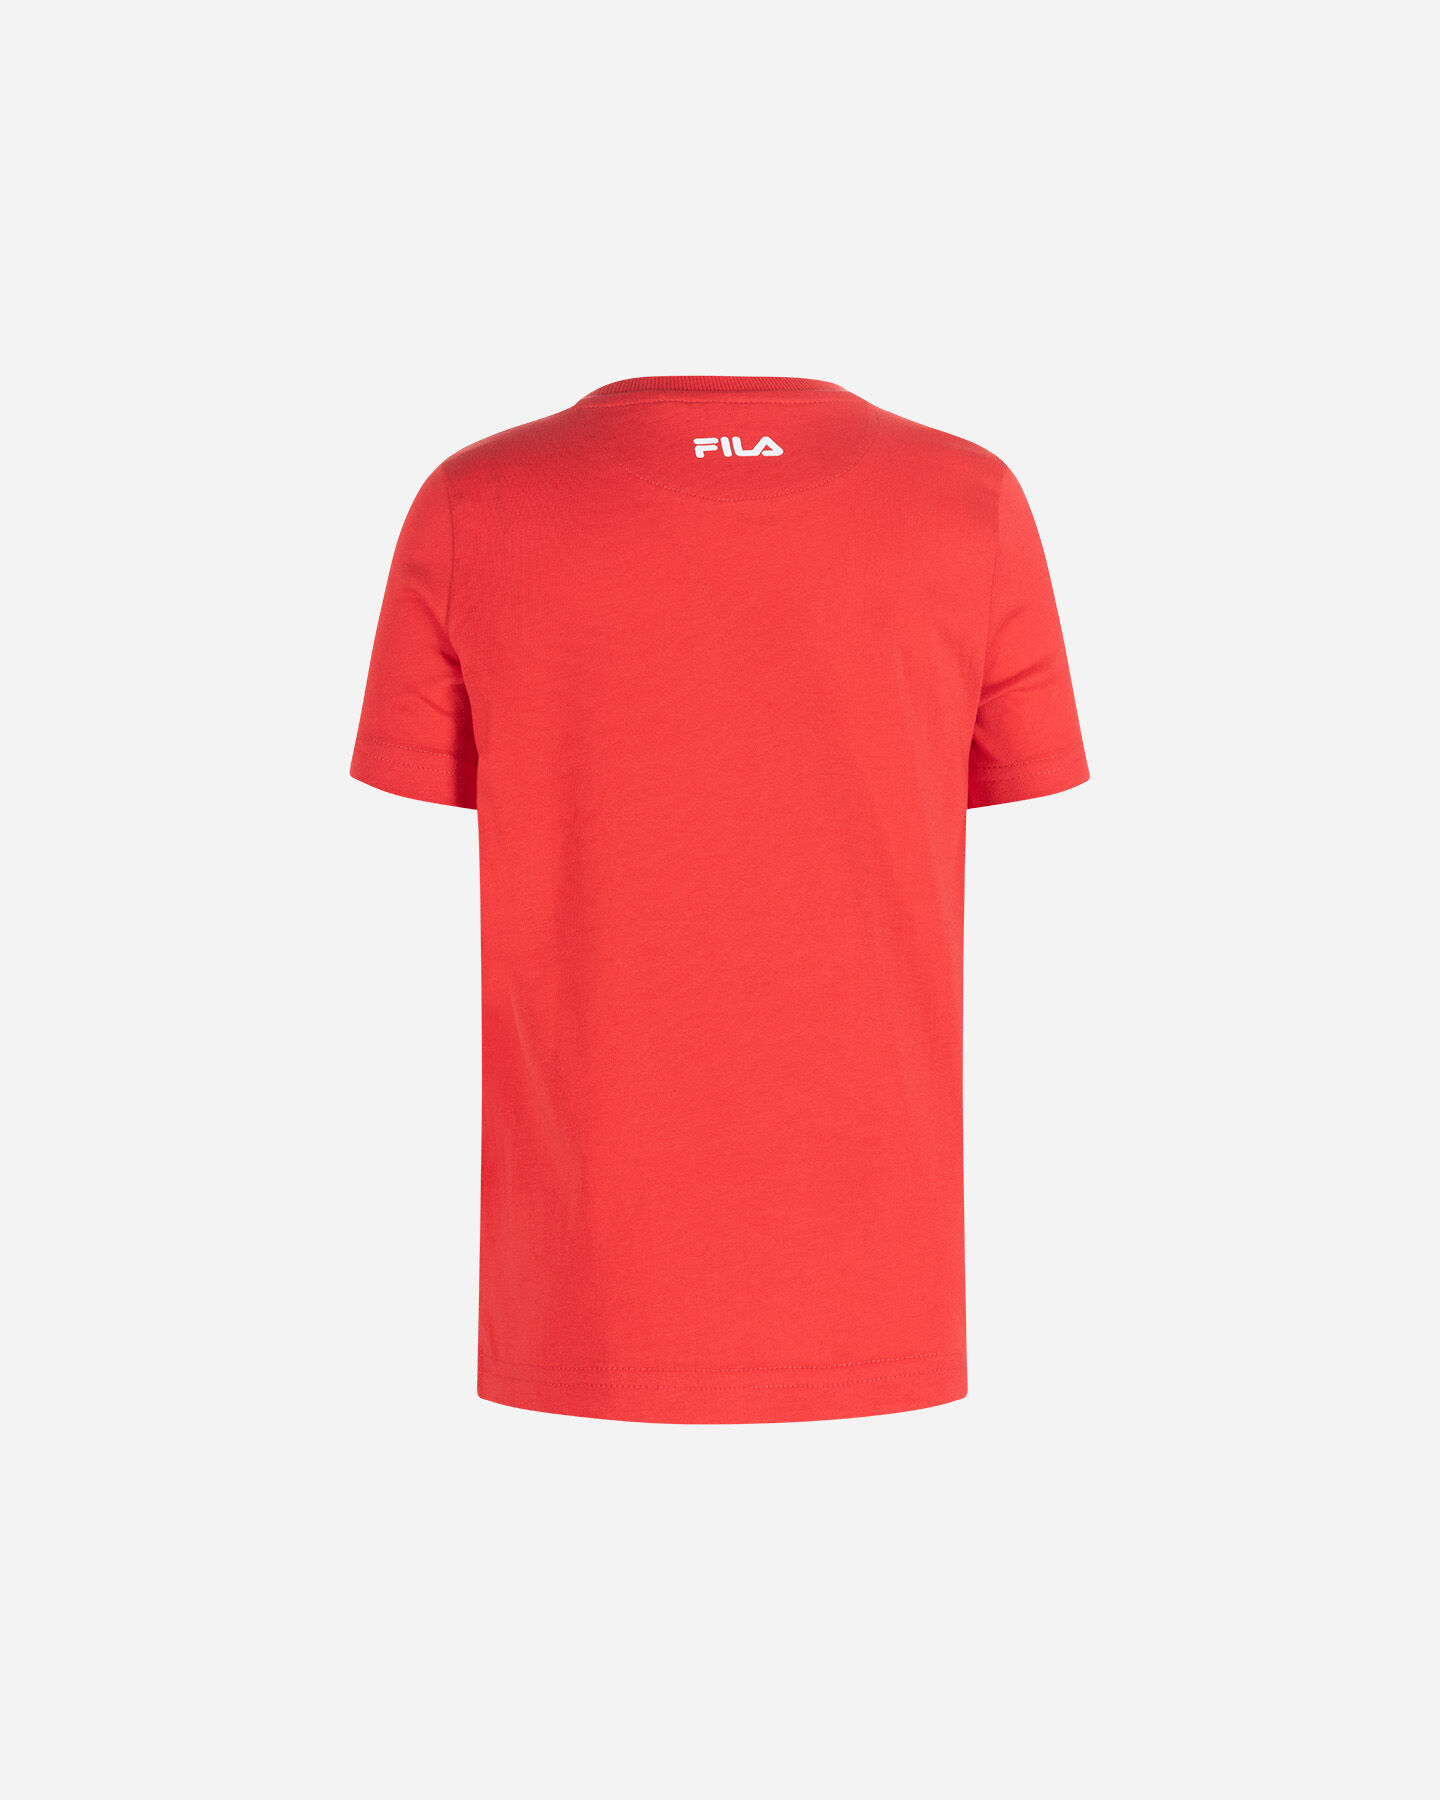  T-Shirt FILA GRAPHIC PUNK JR S4119659|257|6A scatto 1